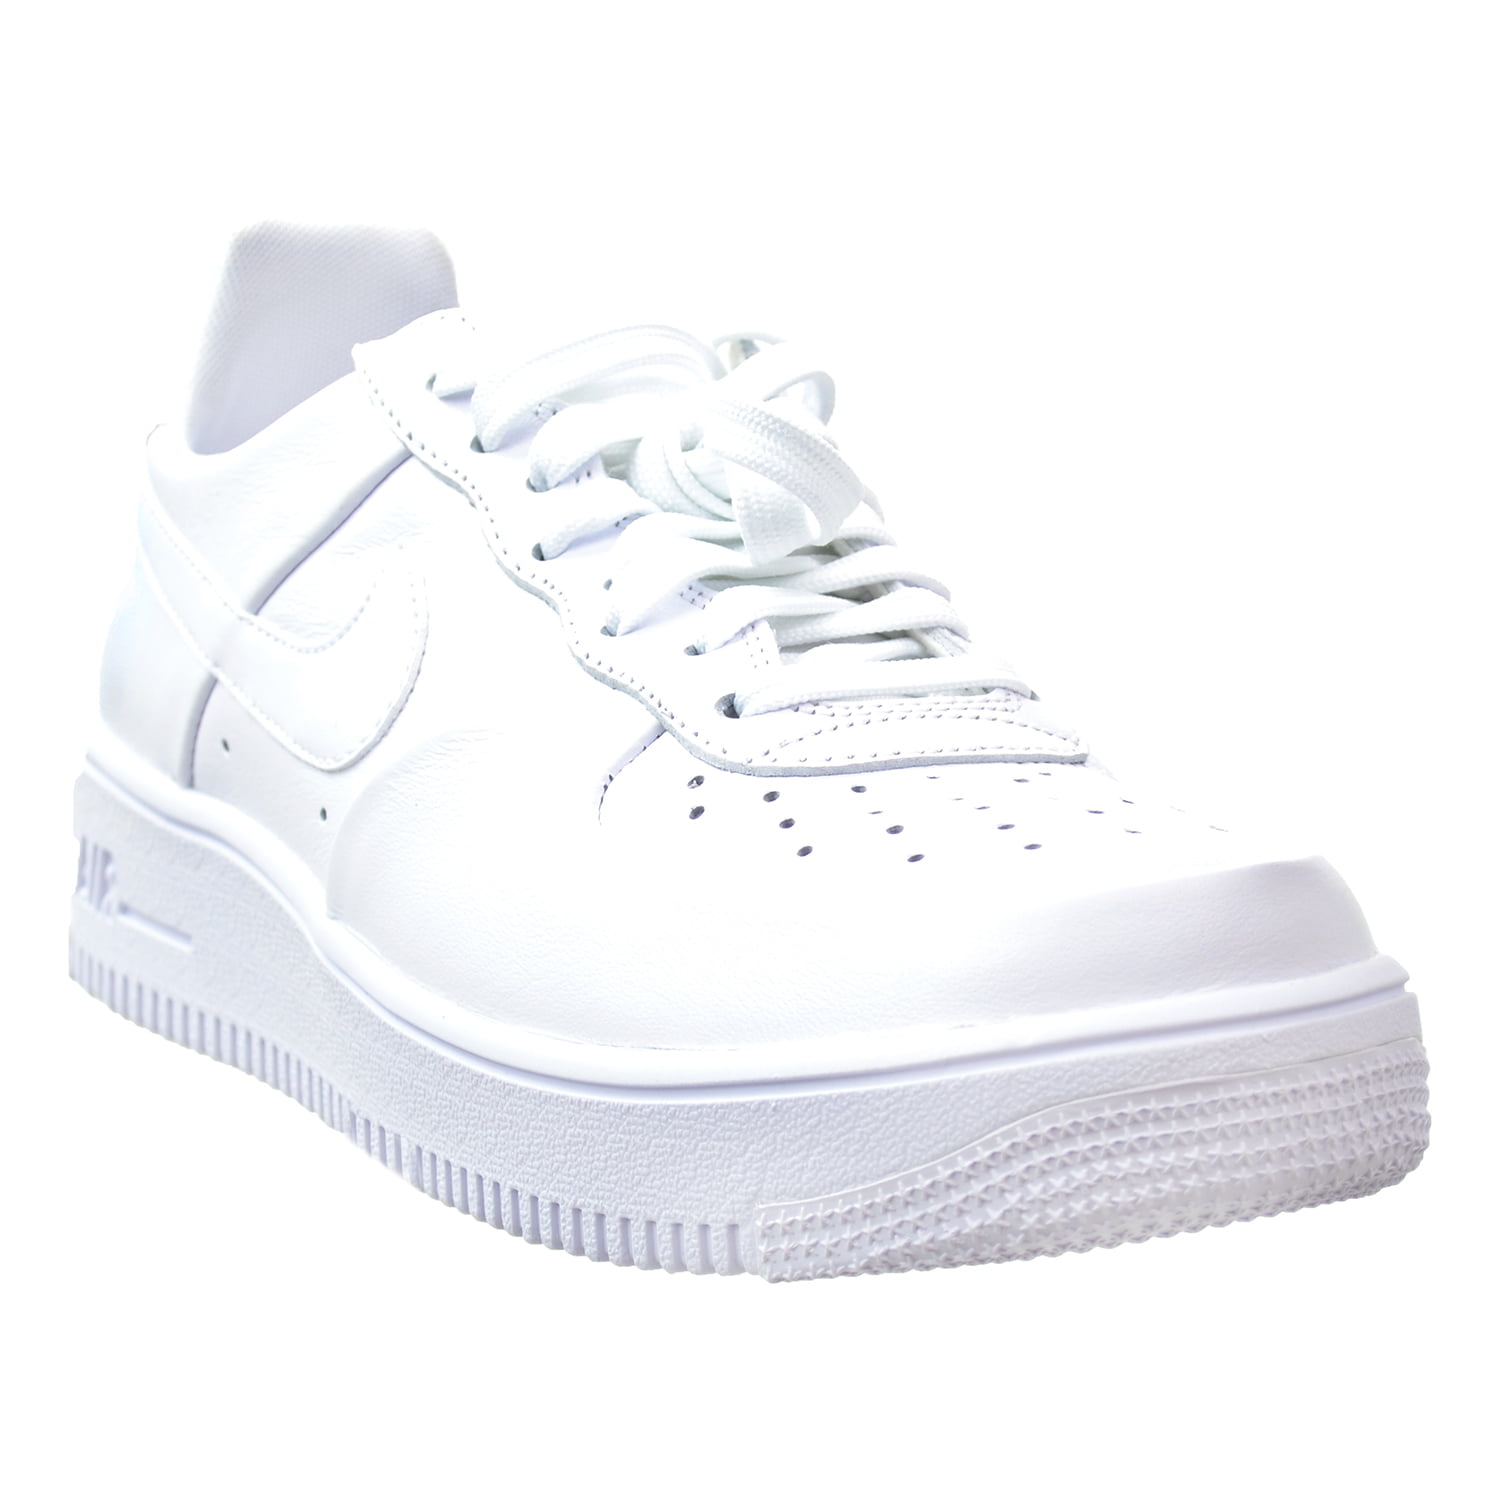 Insatisfecho Pebish bahía Nike Air Force 1 Ultraforce Men's Shoes White/White 845052-100 - Walmart.com